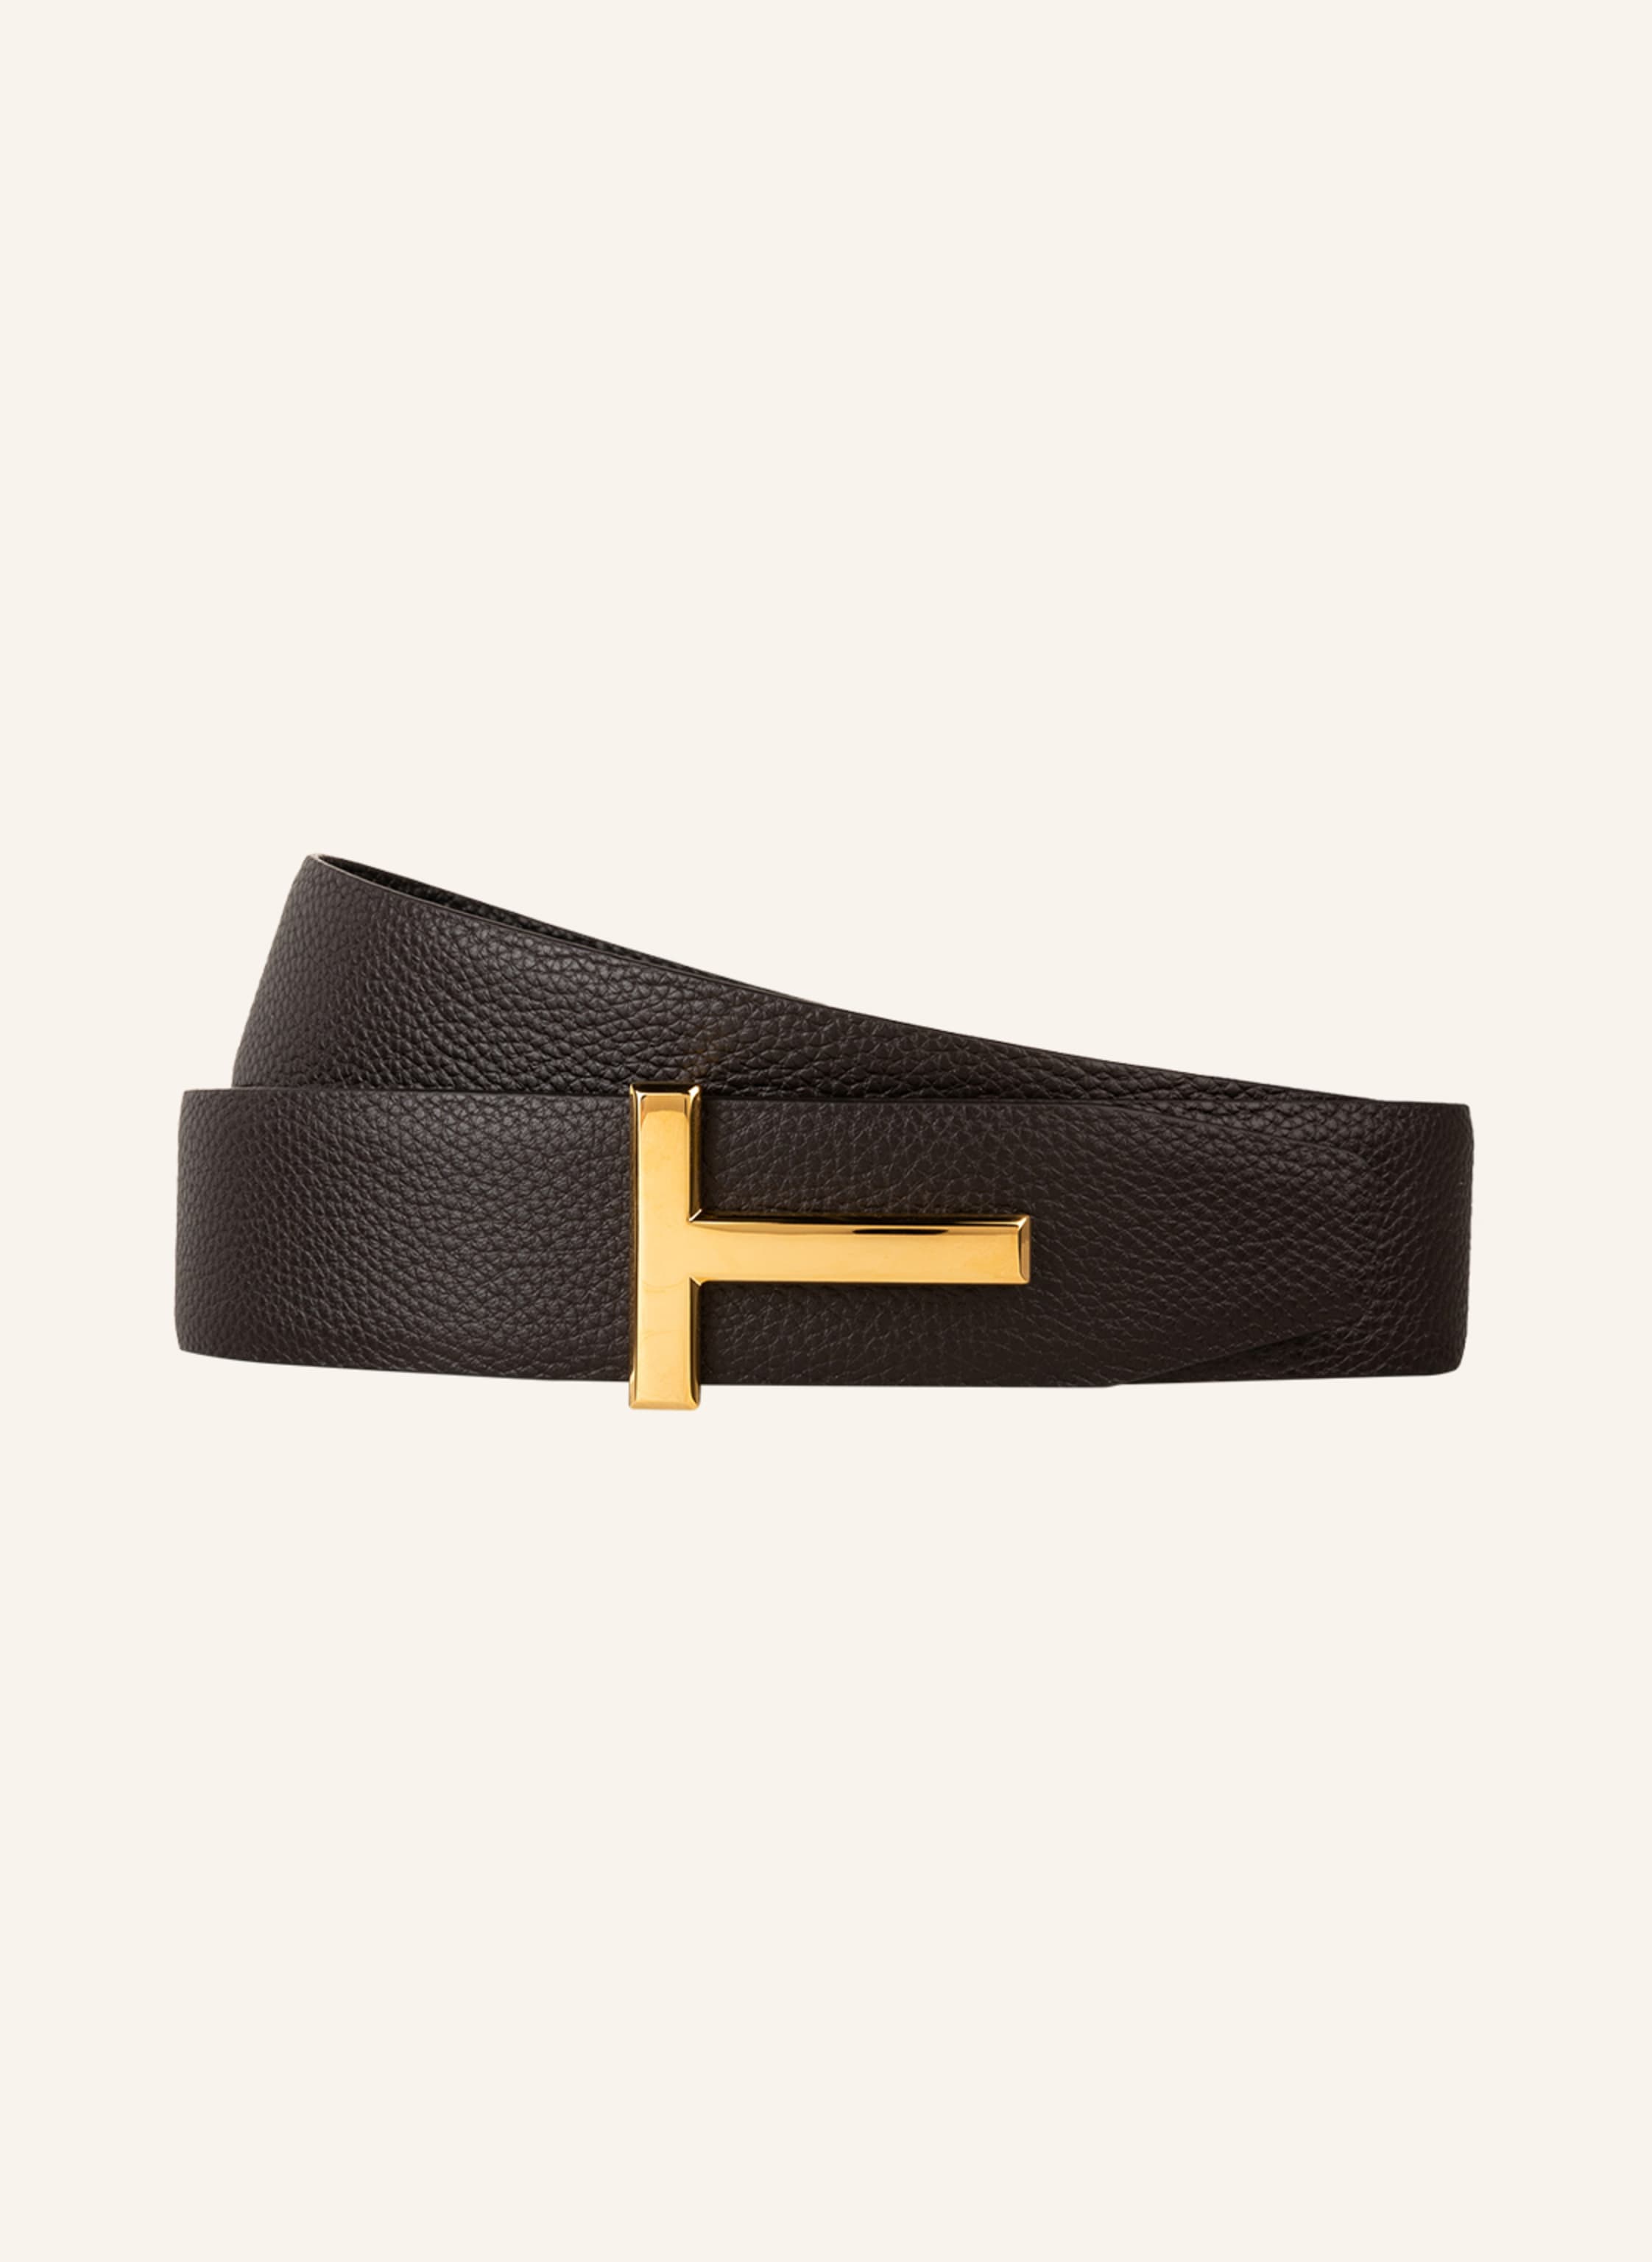 TOM FORD Reversible leather belt in dark brown | Breuninger